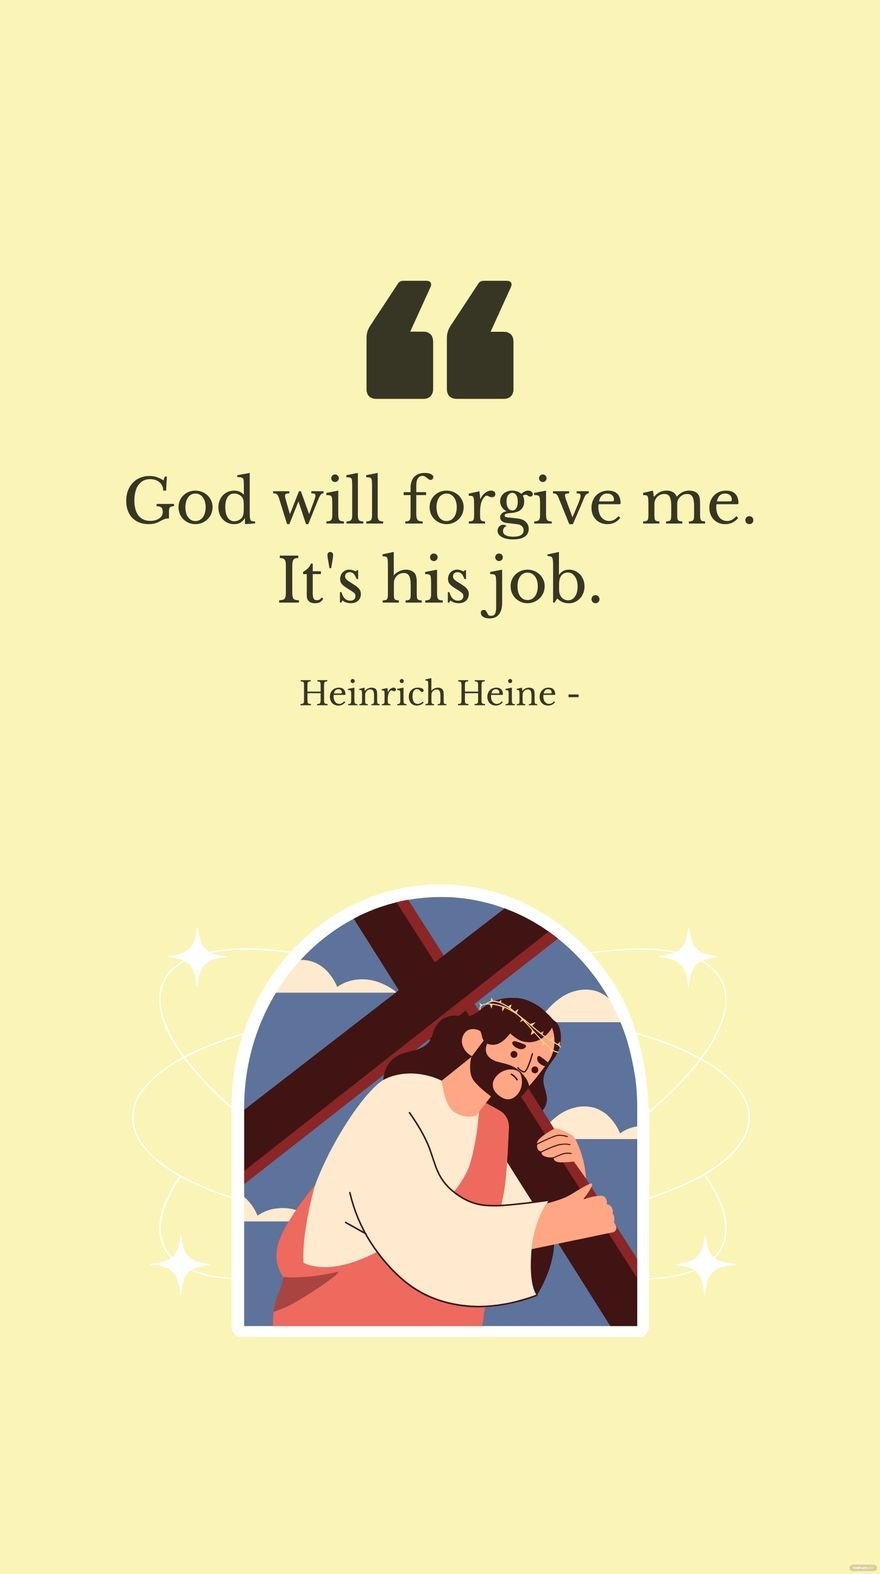 Free Heinrich Heine - God will forgive me. It's his job. in JPG